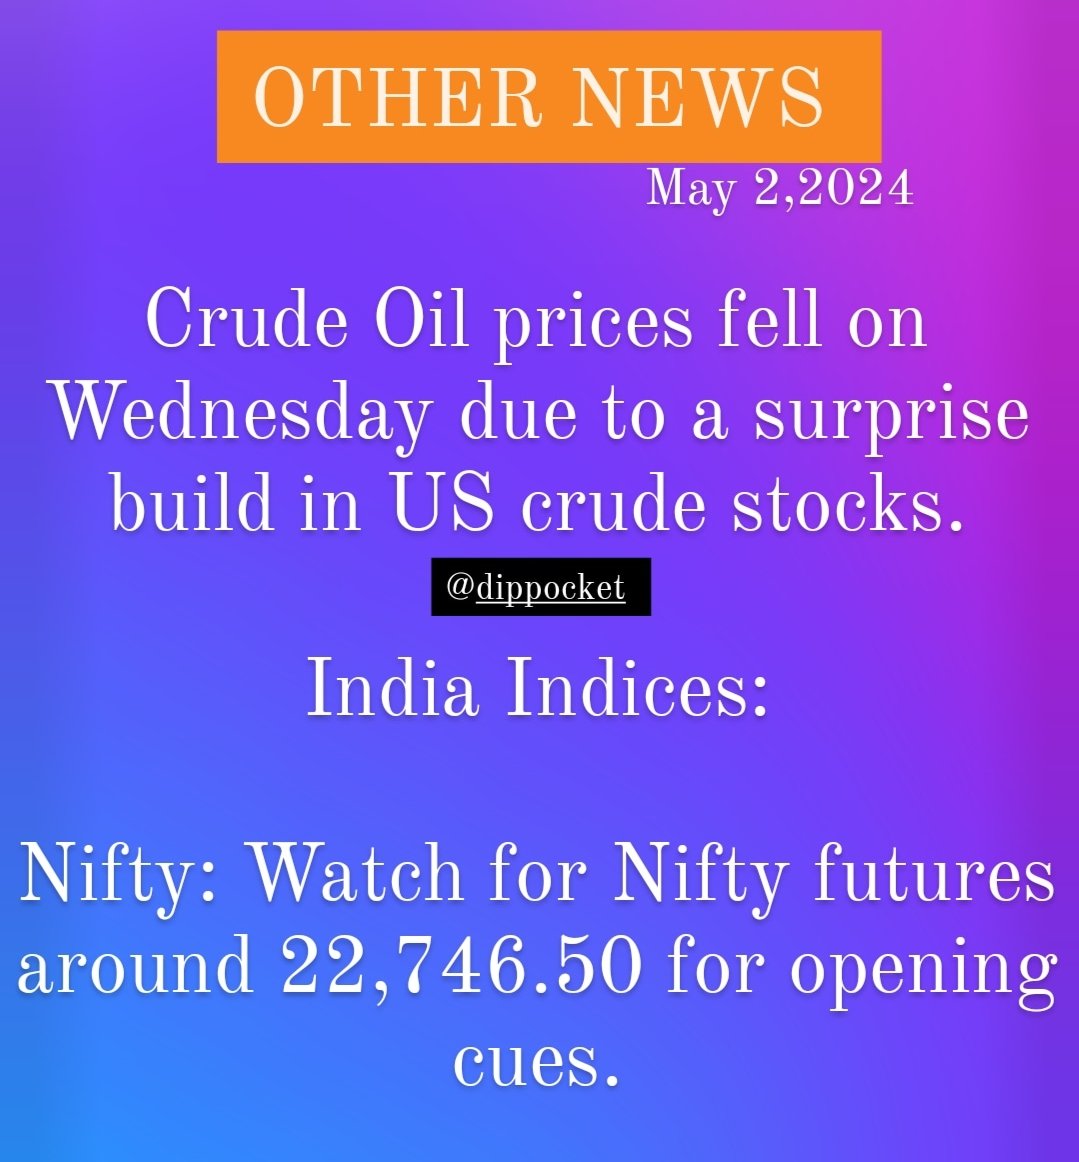 #stockmarkets #StockInNews #sharebazarnews #sharemarket #indianstocks #nse #bse #sensex #nifty #nifty50  #nationalstockexchange #invested #CrudeOil